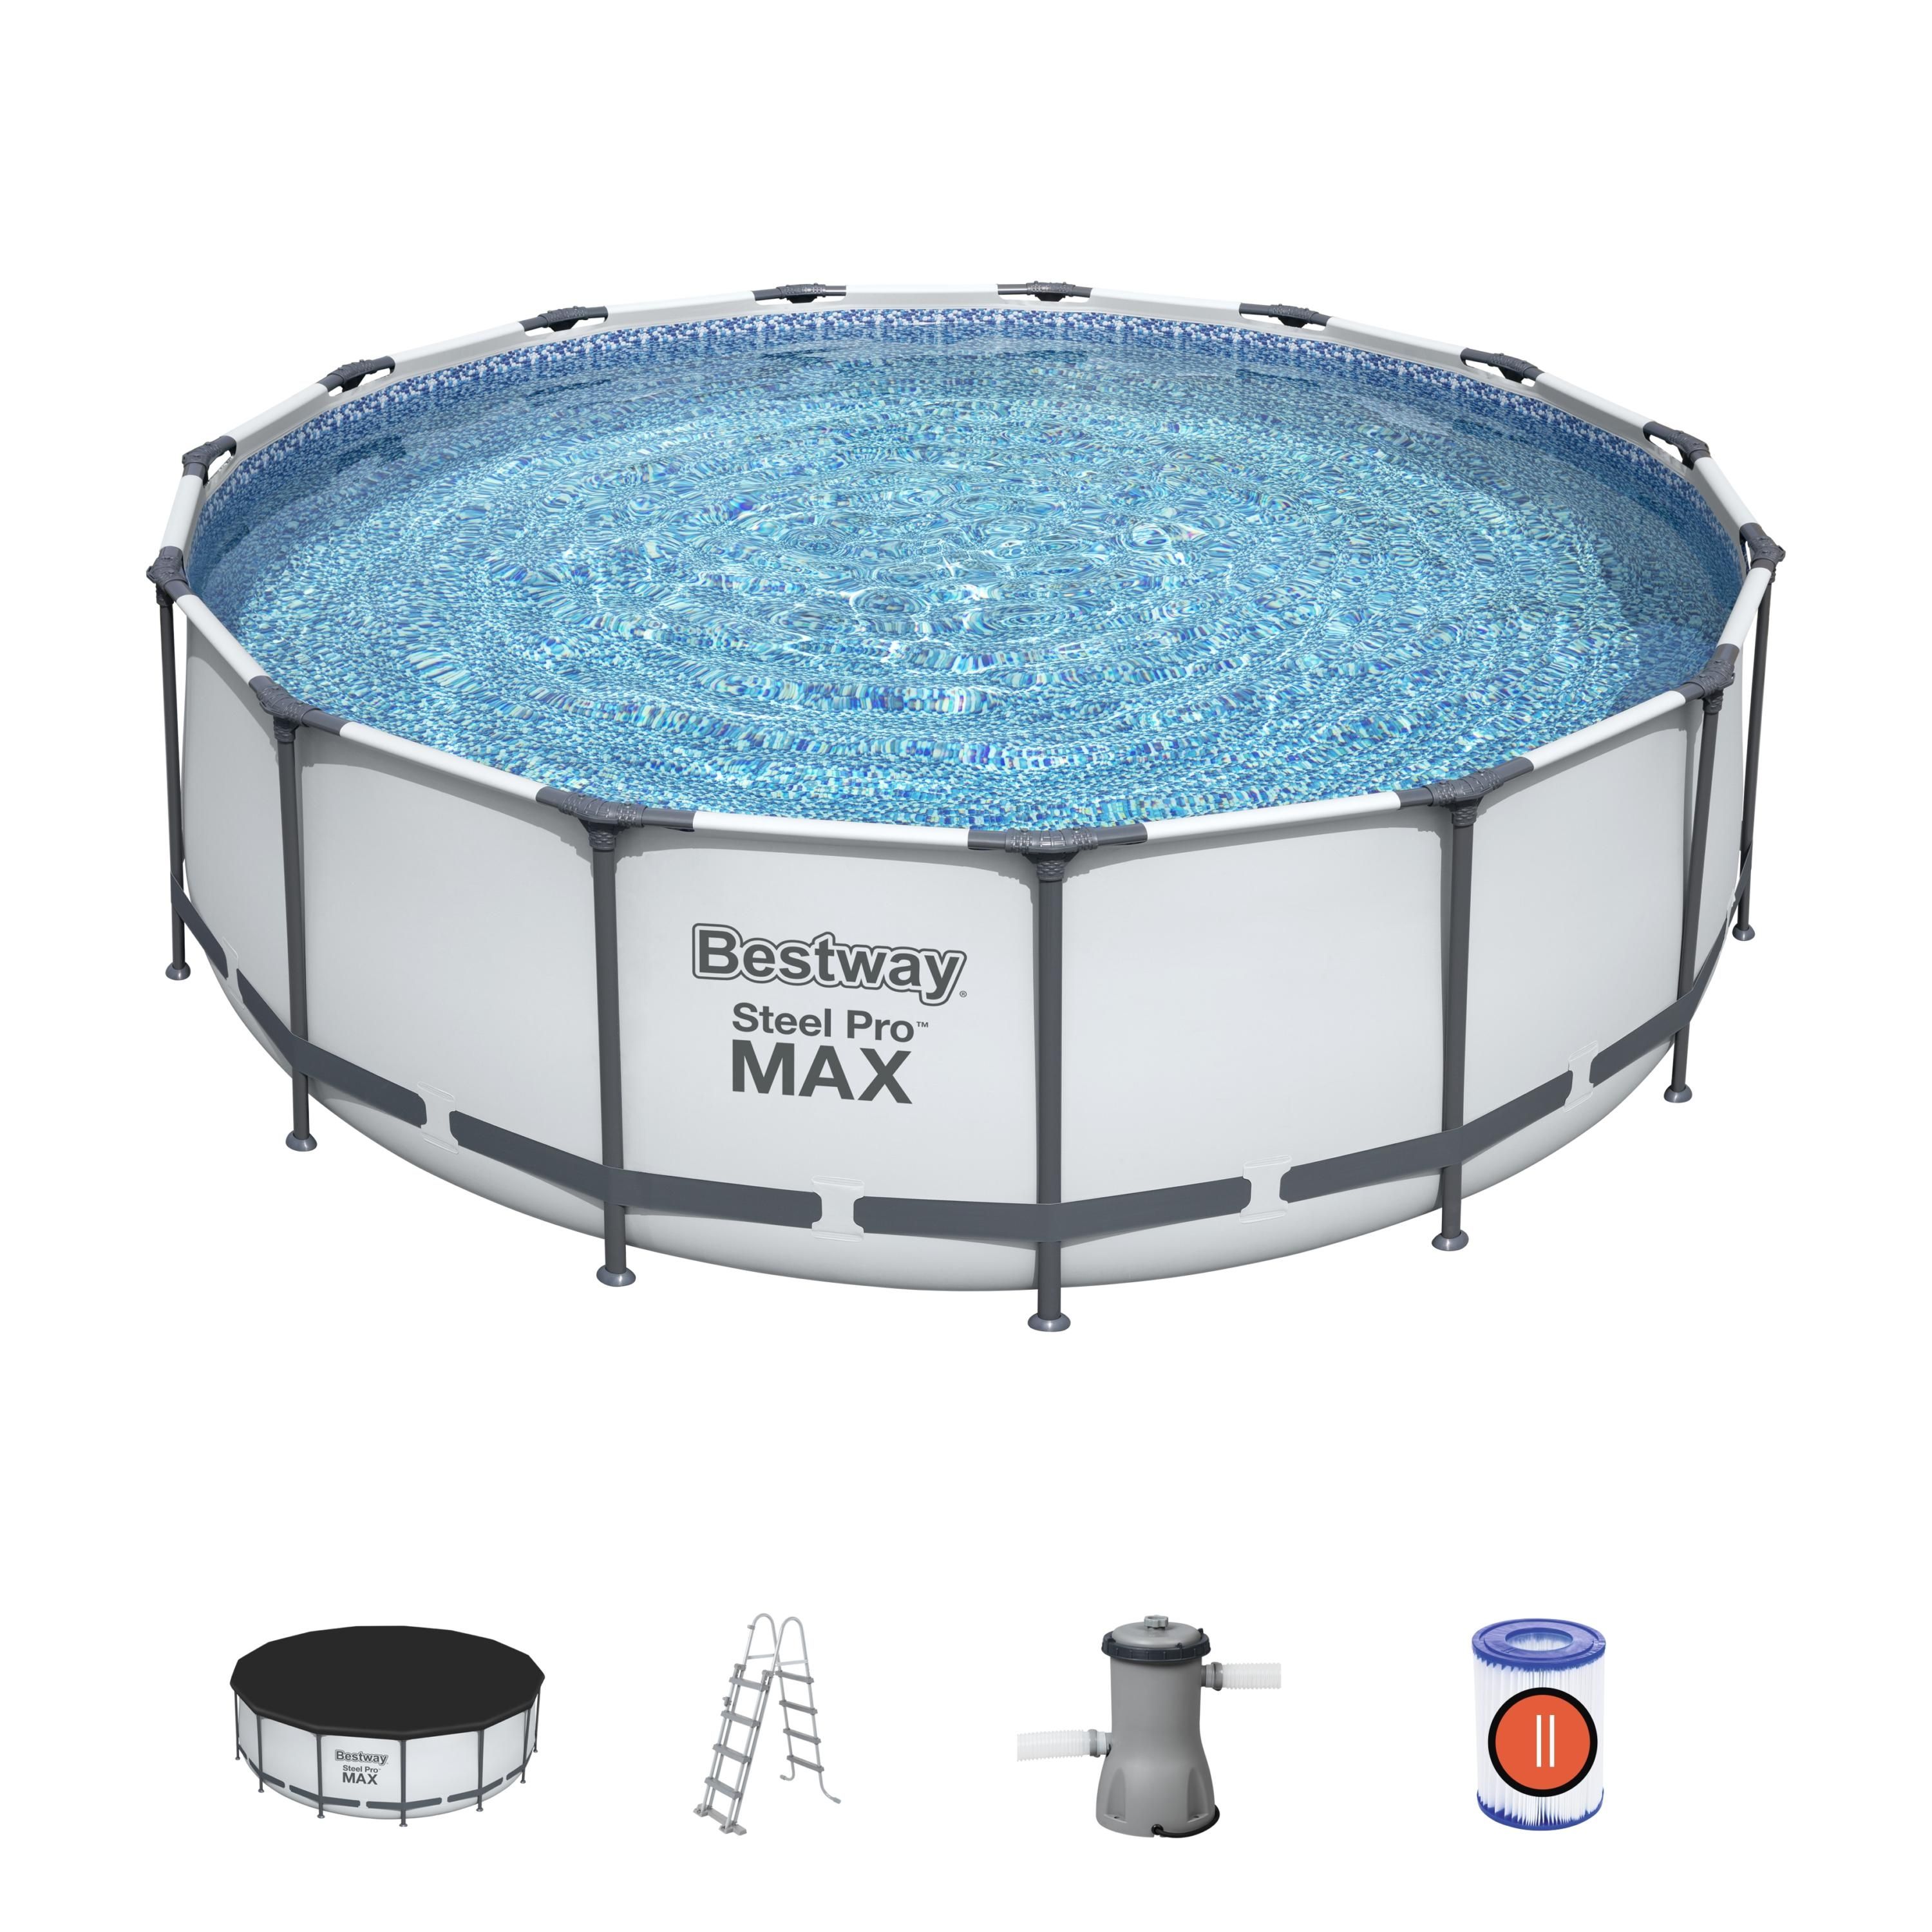 Bestway Bestway Steel PRO MAX 14 FT x 48” Round Pool SpareT Connector Part Model 2021, 